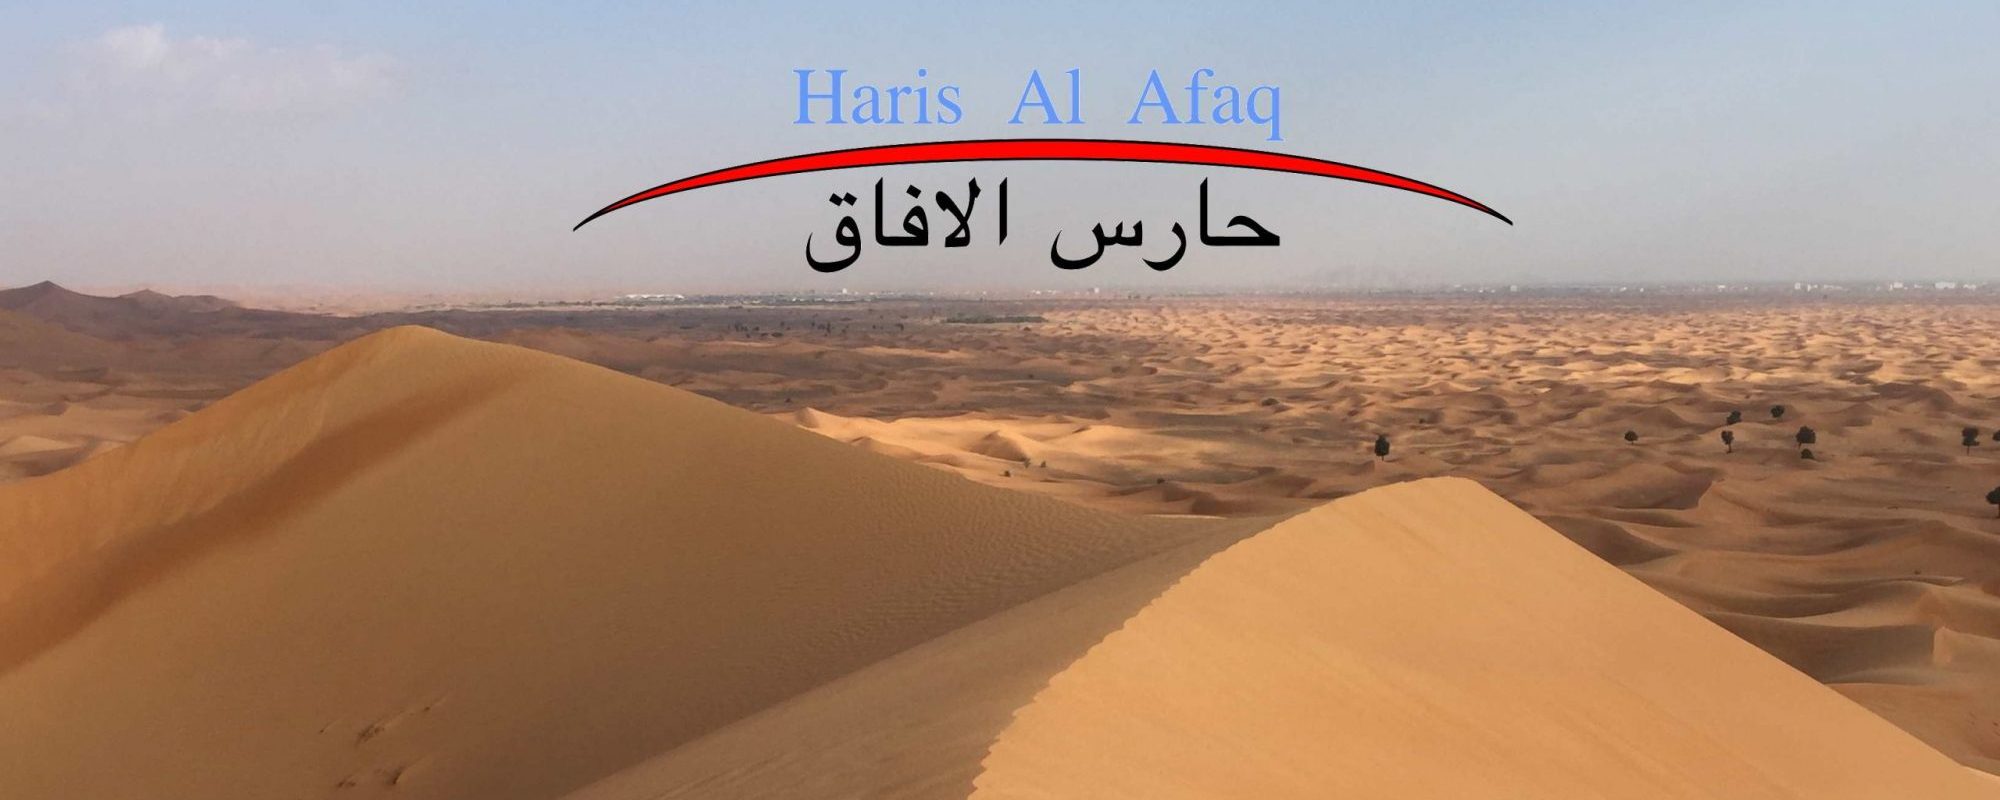 Haris Al Afaq Logo & Desert Scene